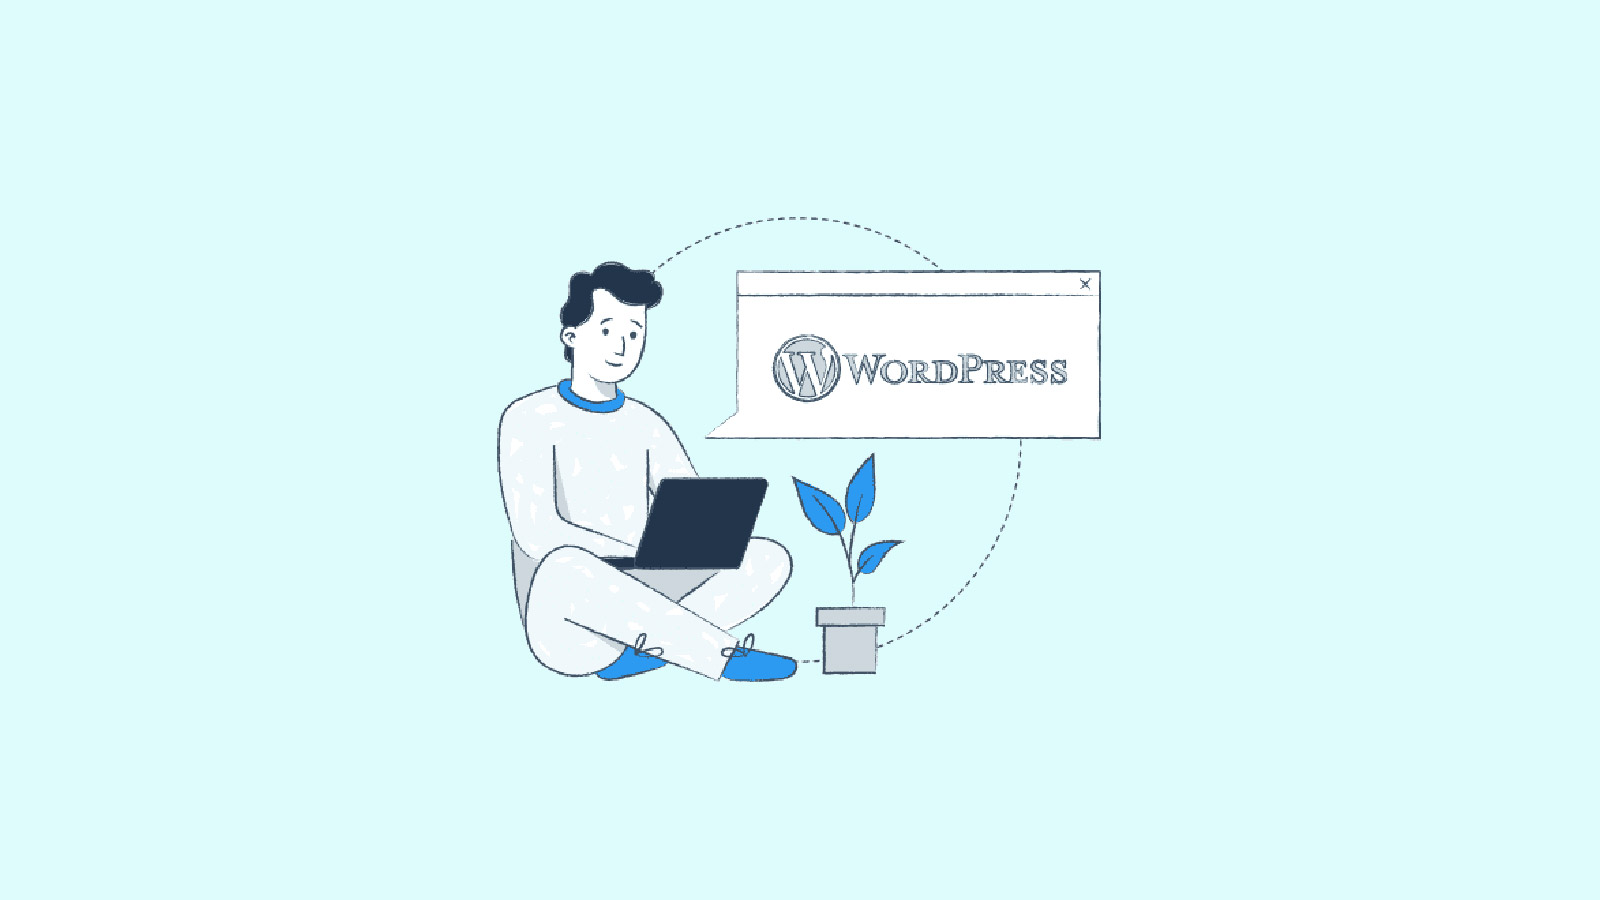 WordPress Knowledge Base Plugins